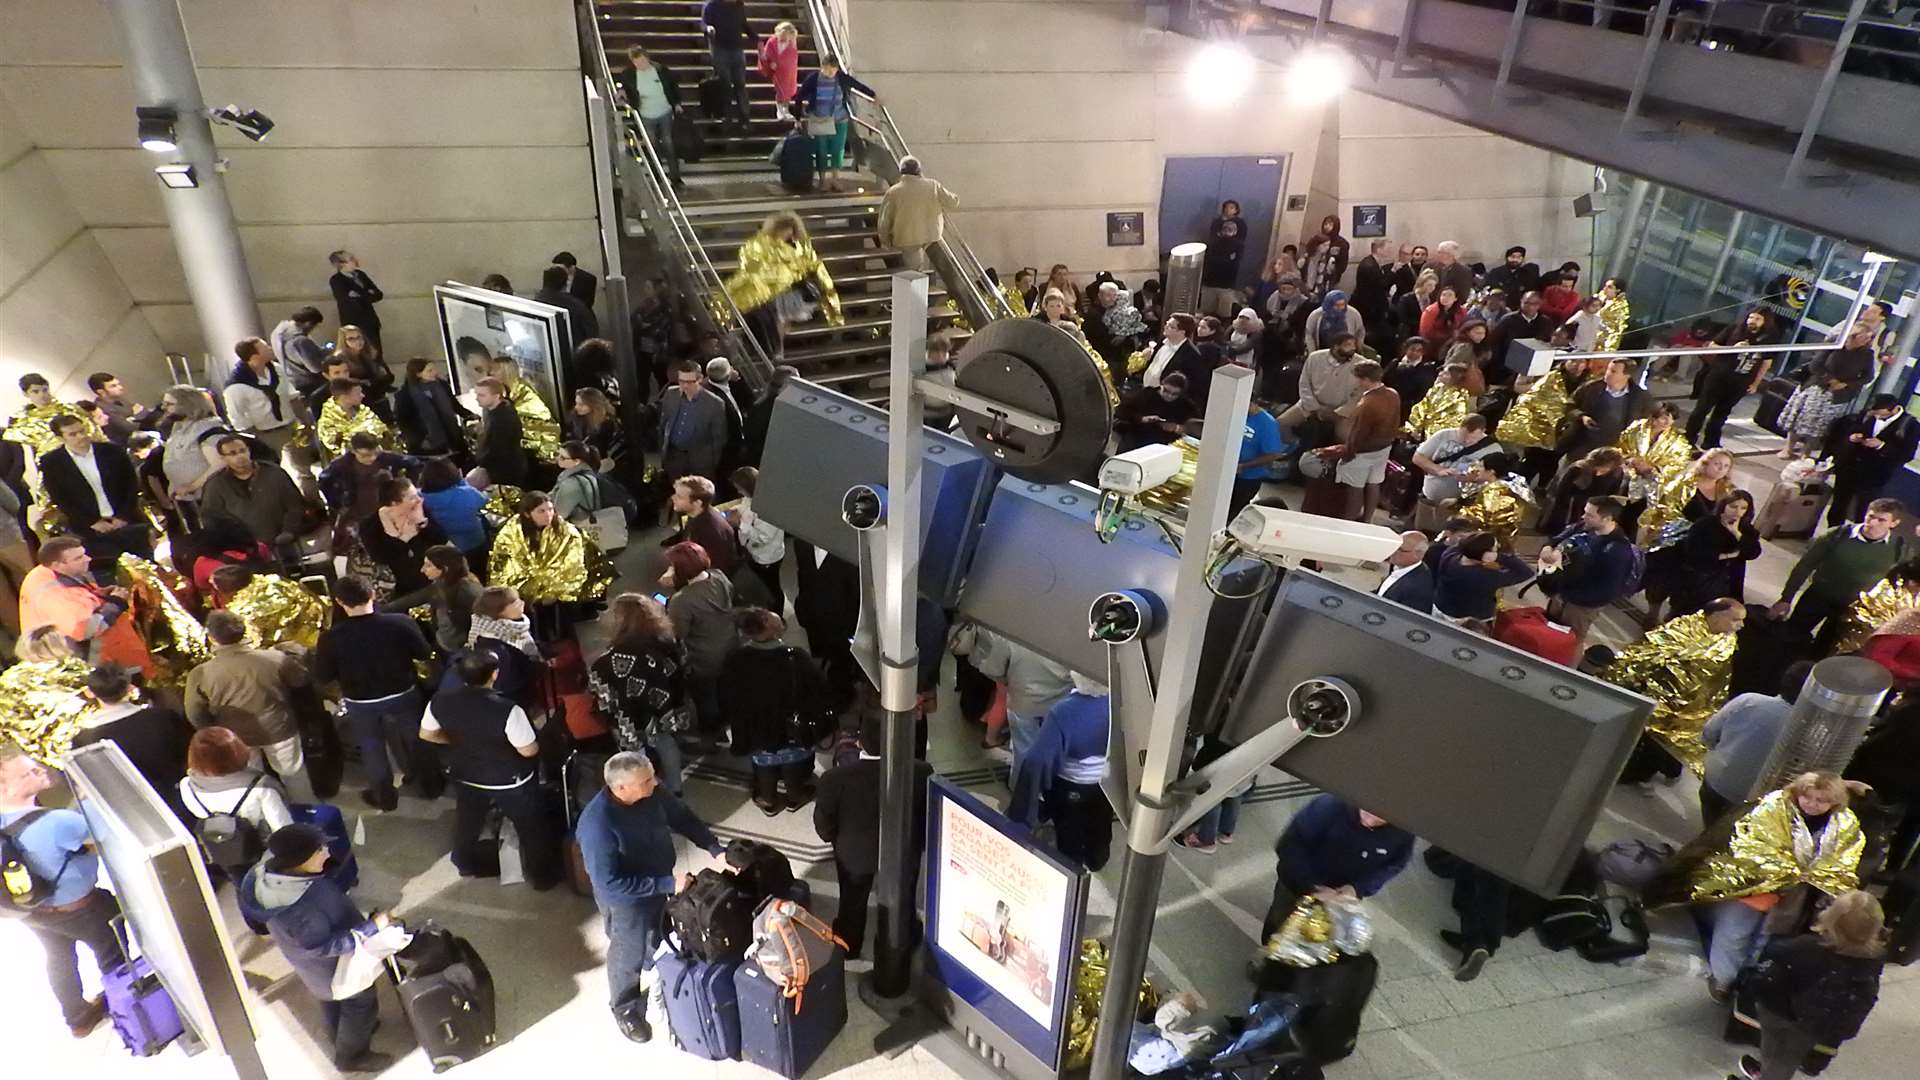 Passengers were stranded overnight